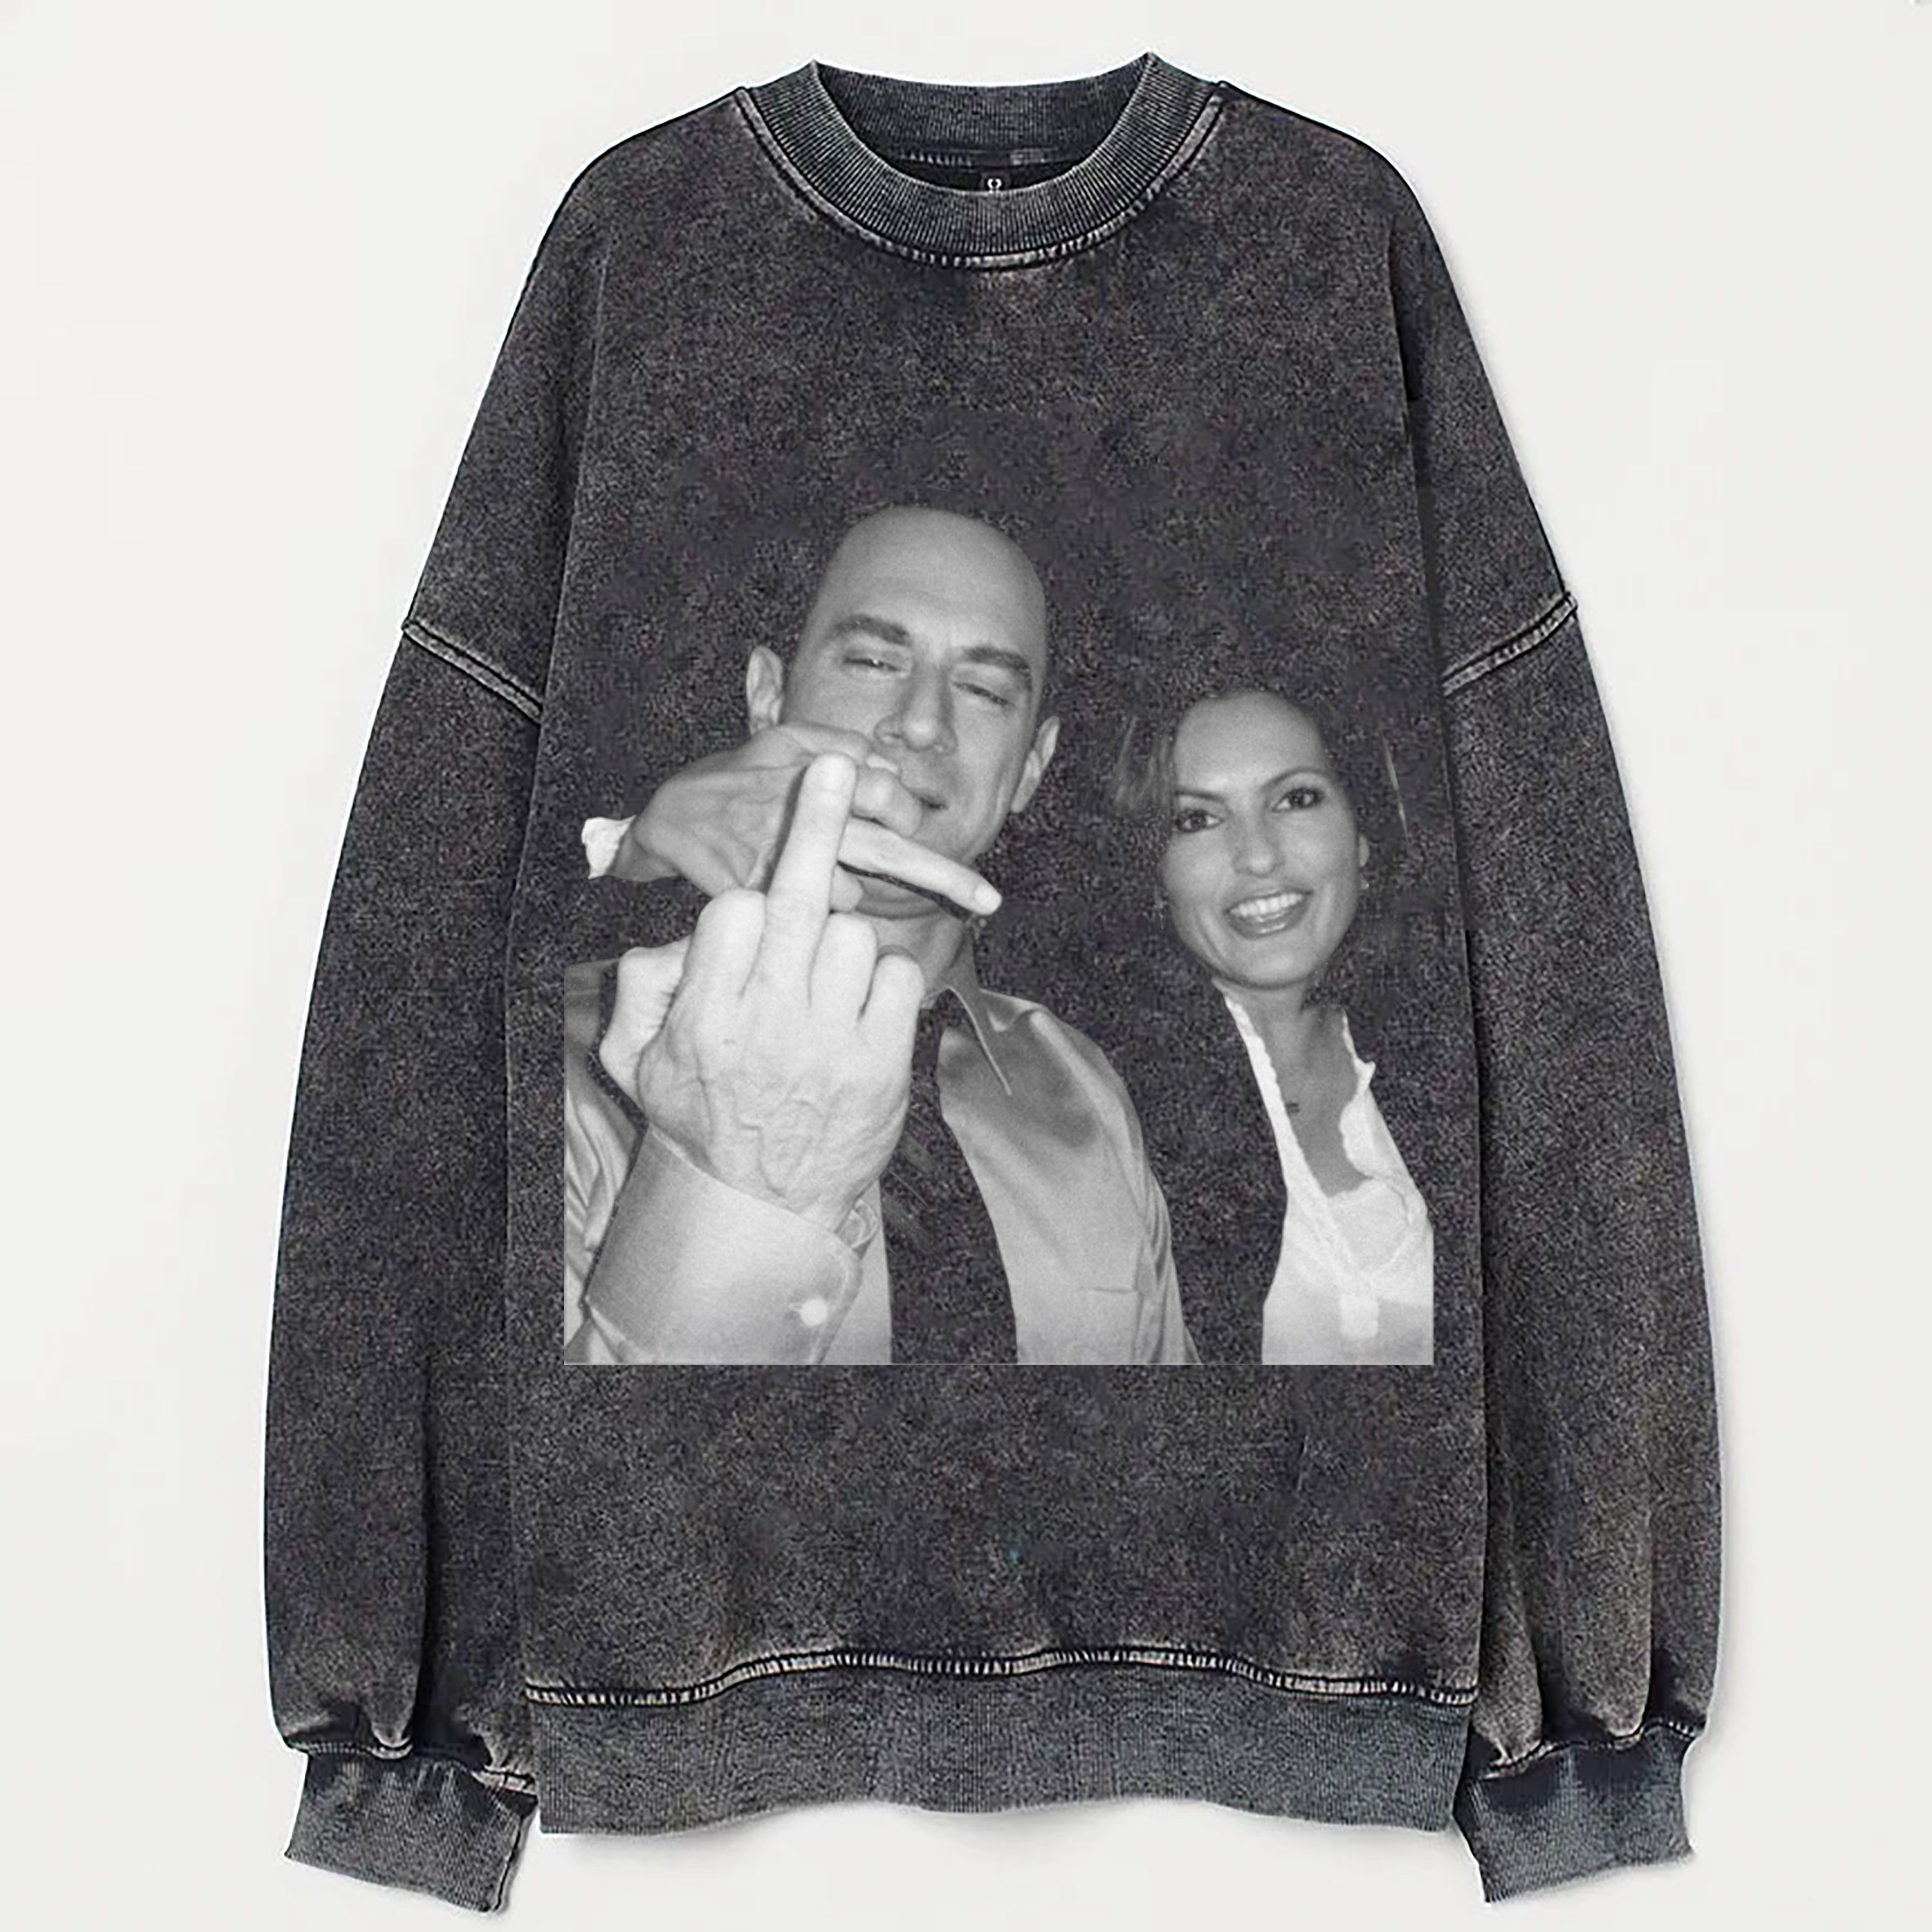 Vintage Elliot Stabler And Olivia Benson Sweatshirt/Shirt